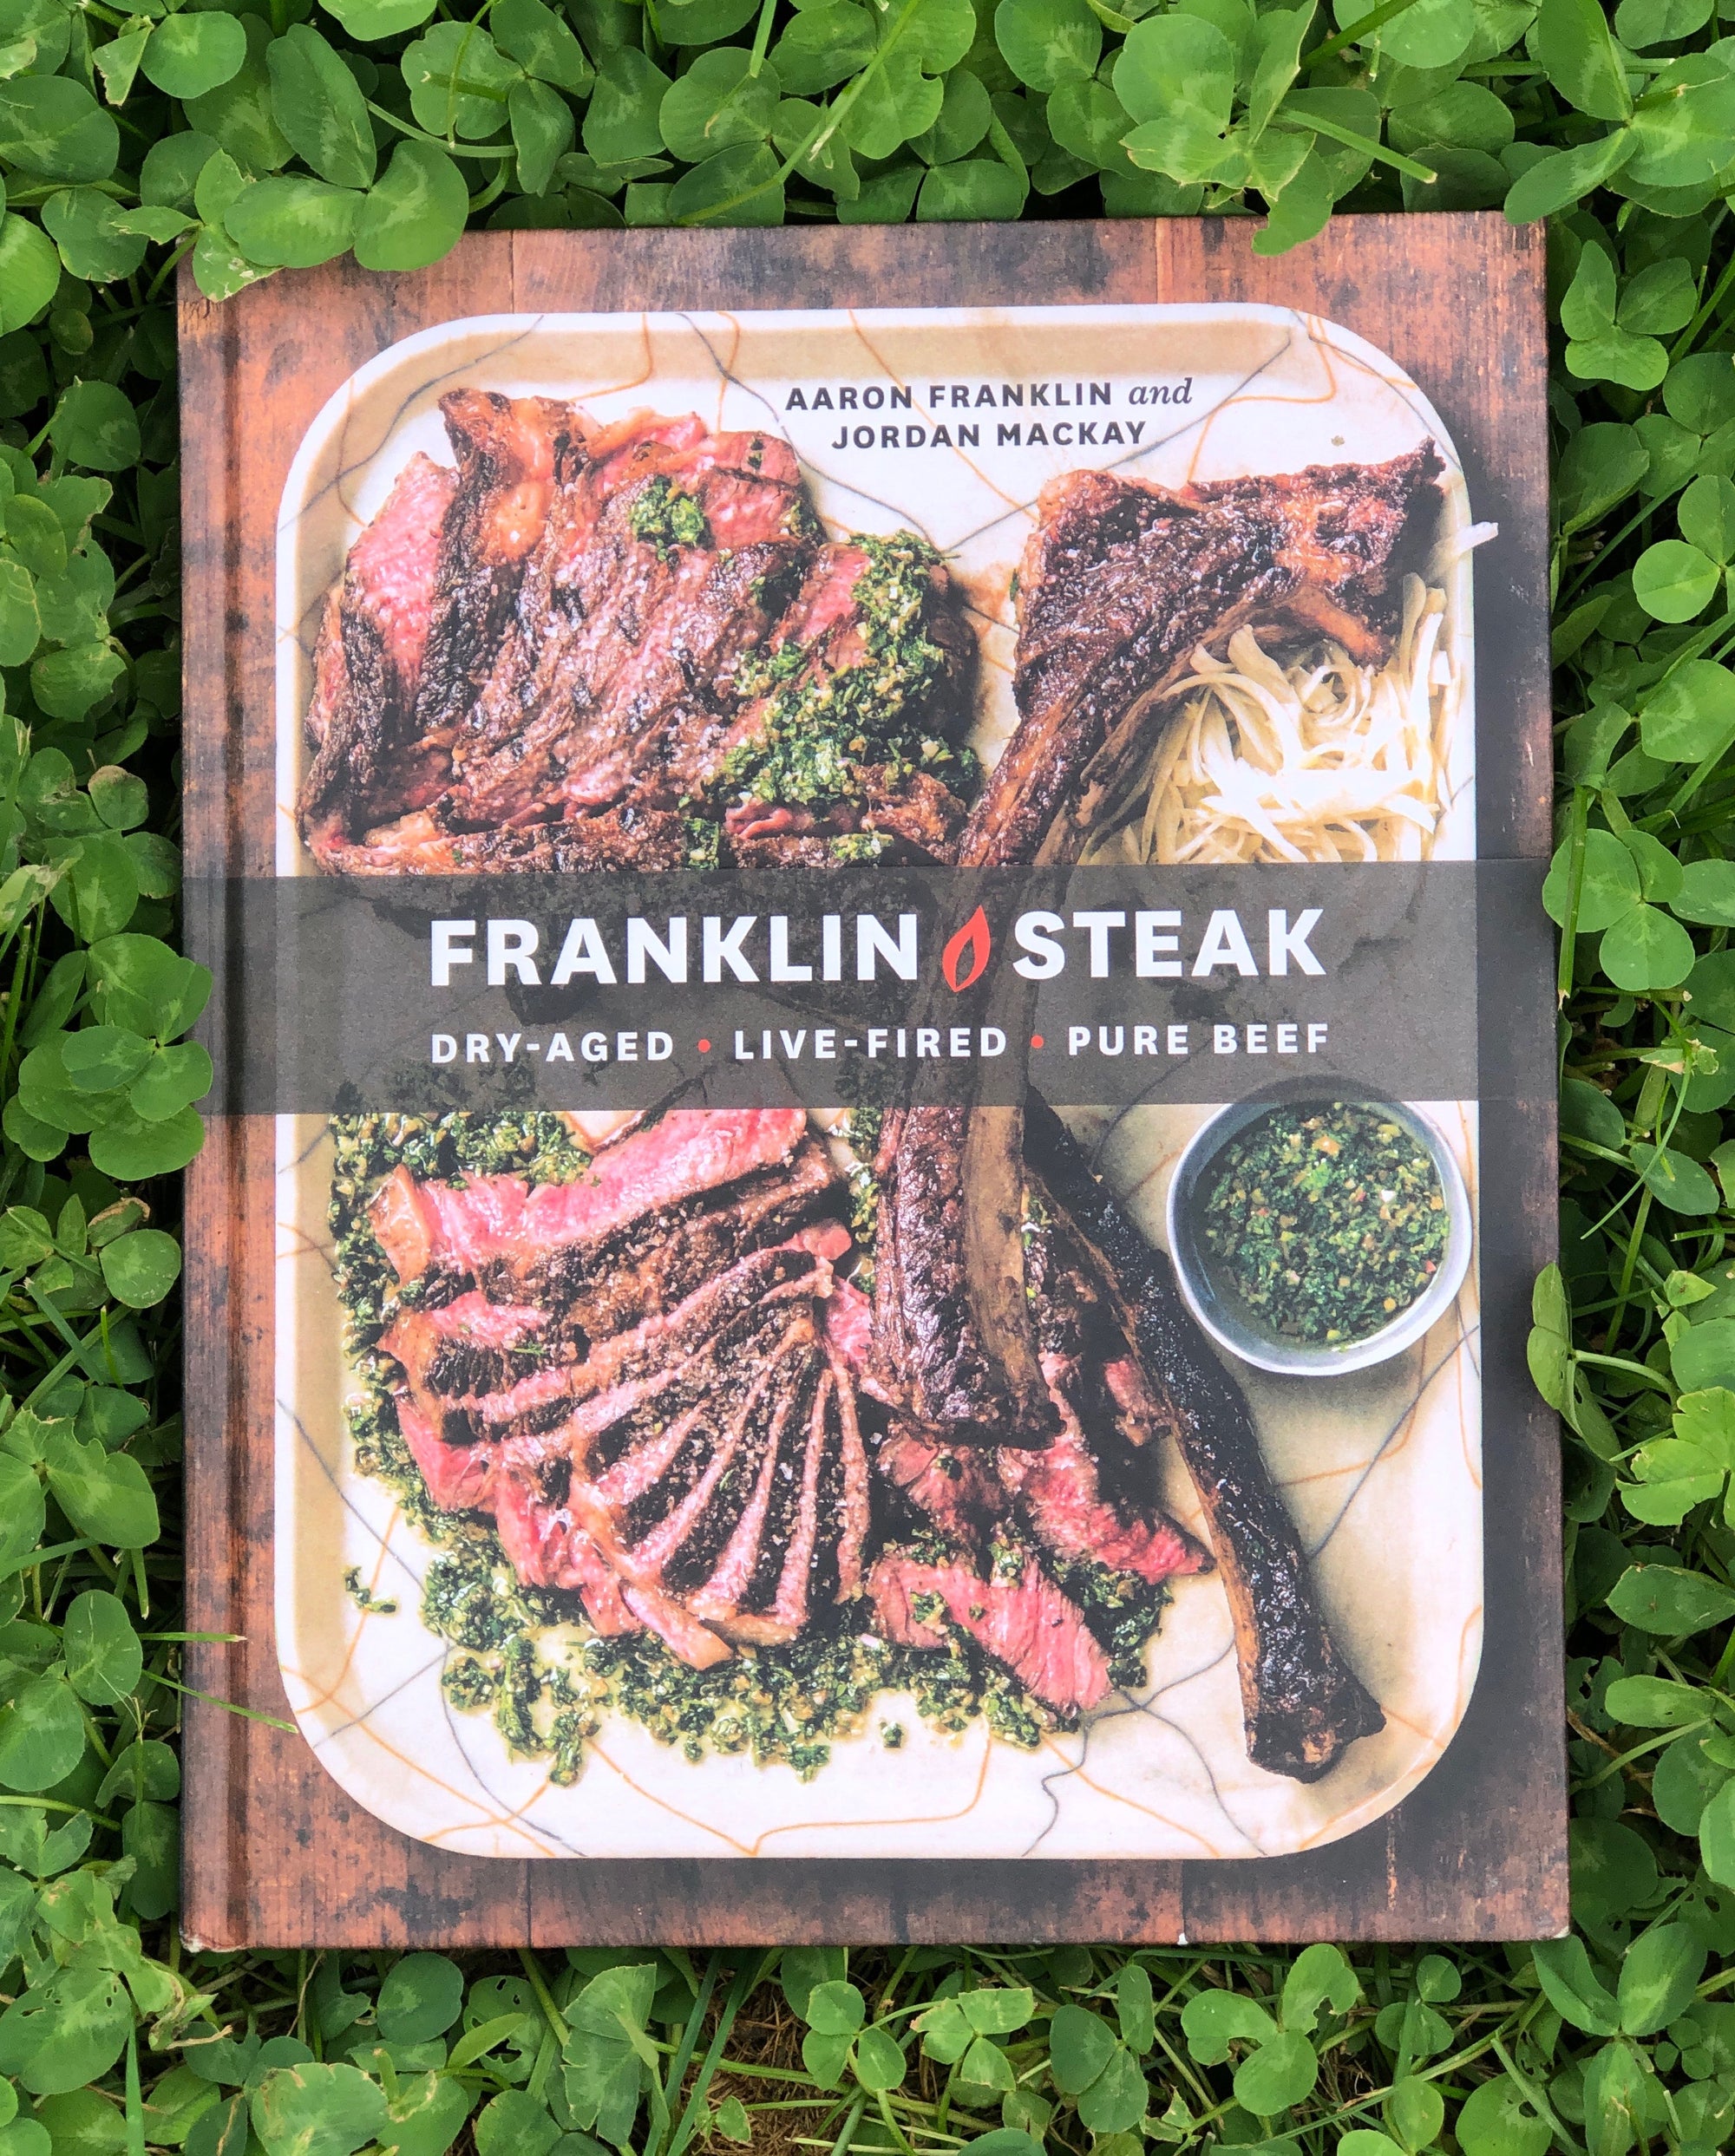 Franklin Steak book siting on leaves